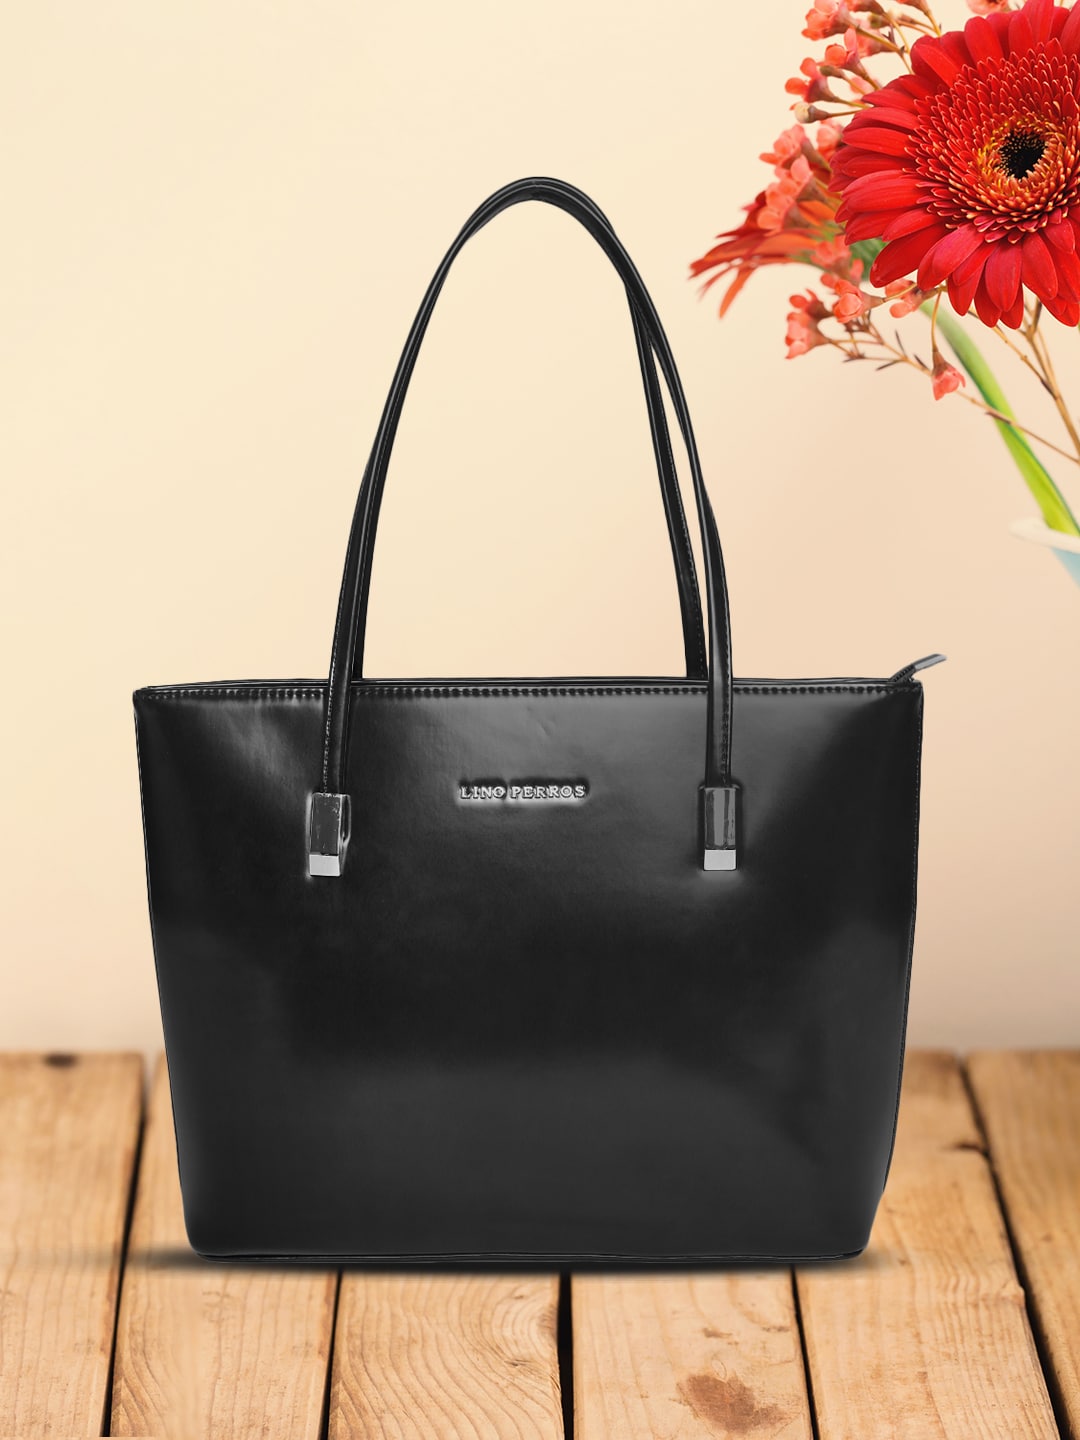 Lino Perros Black Glossy Shoulder Bag Price in India